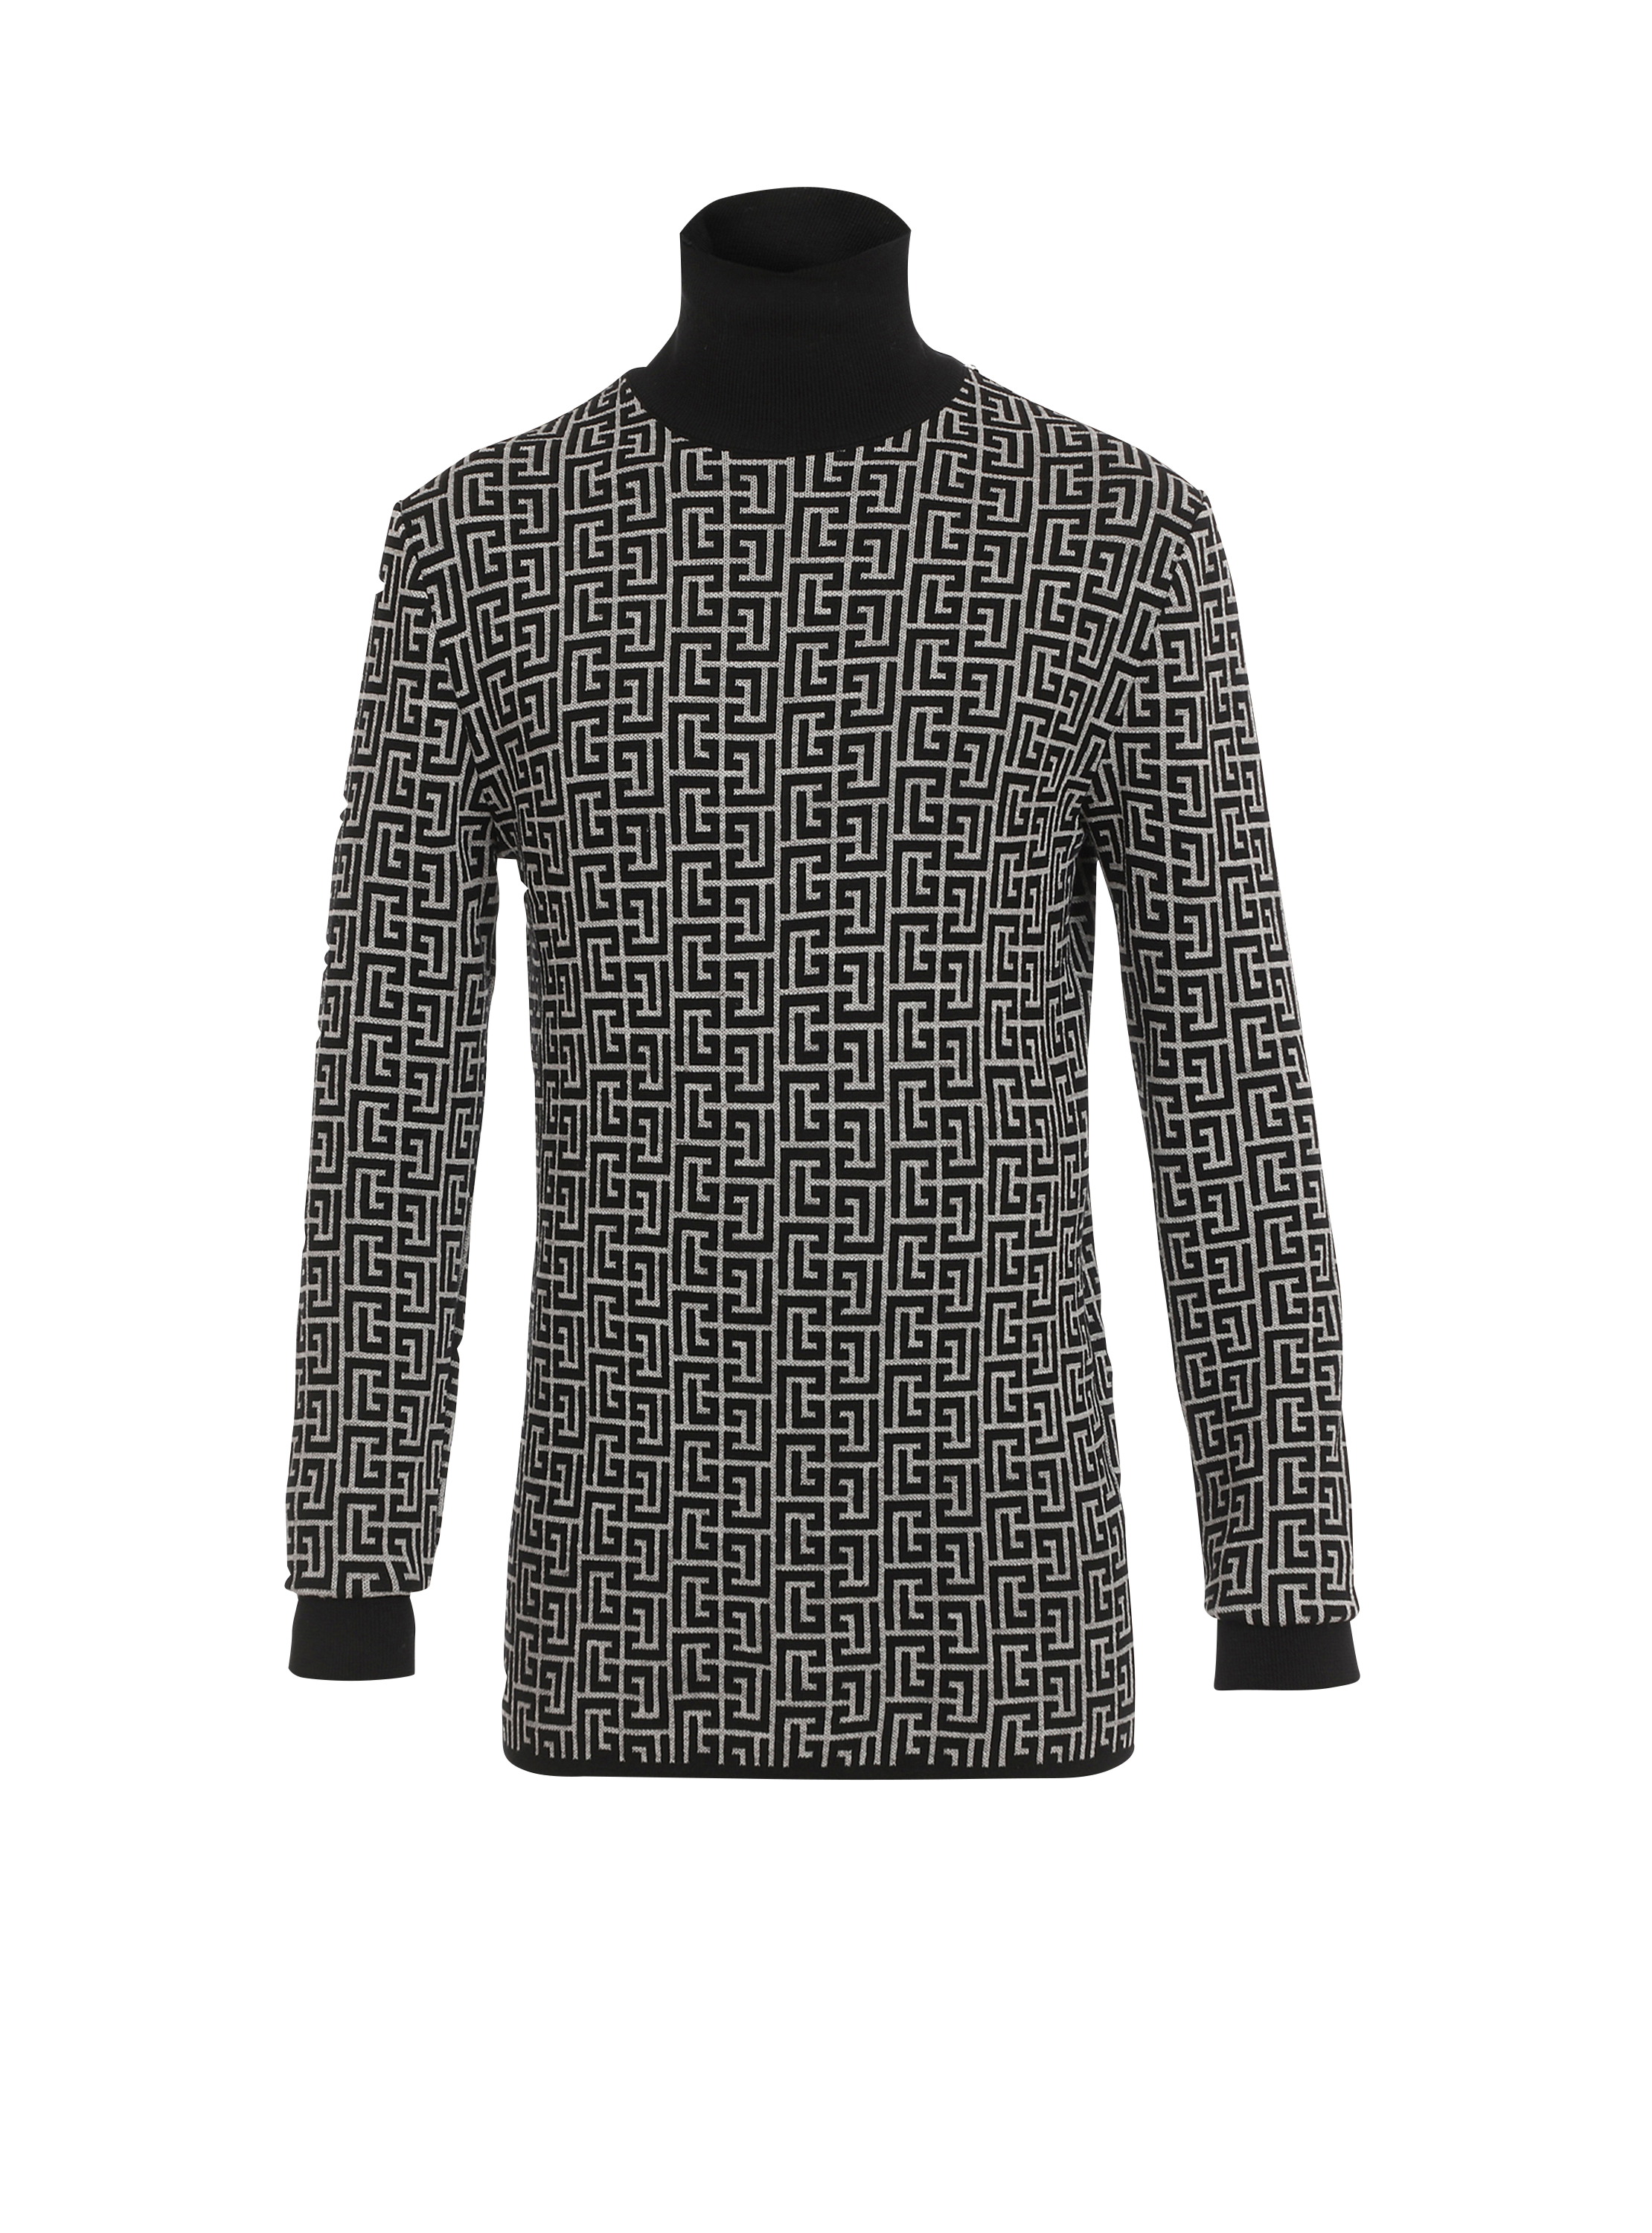 Wool turtleneck sweater, black, hi-res